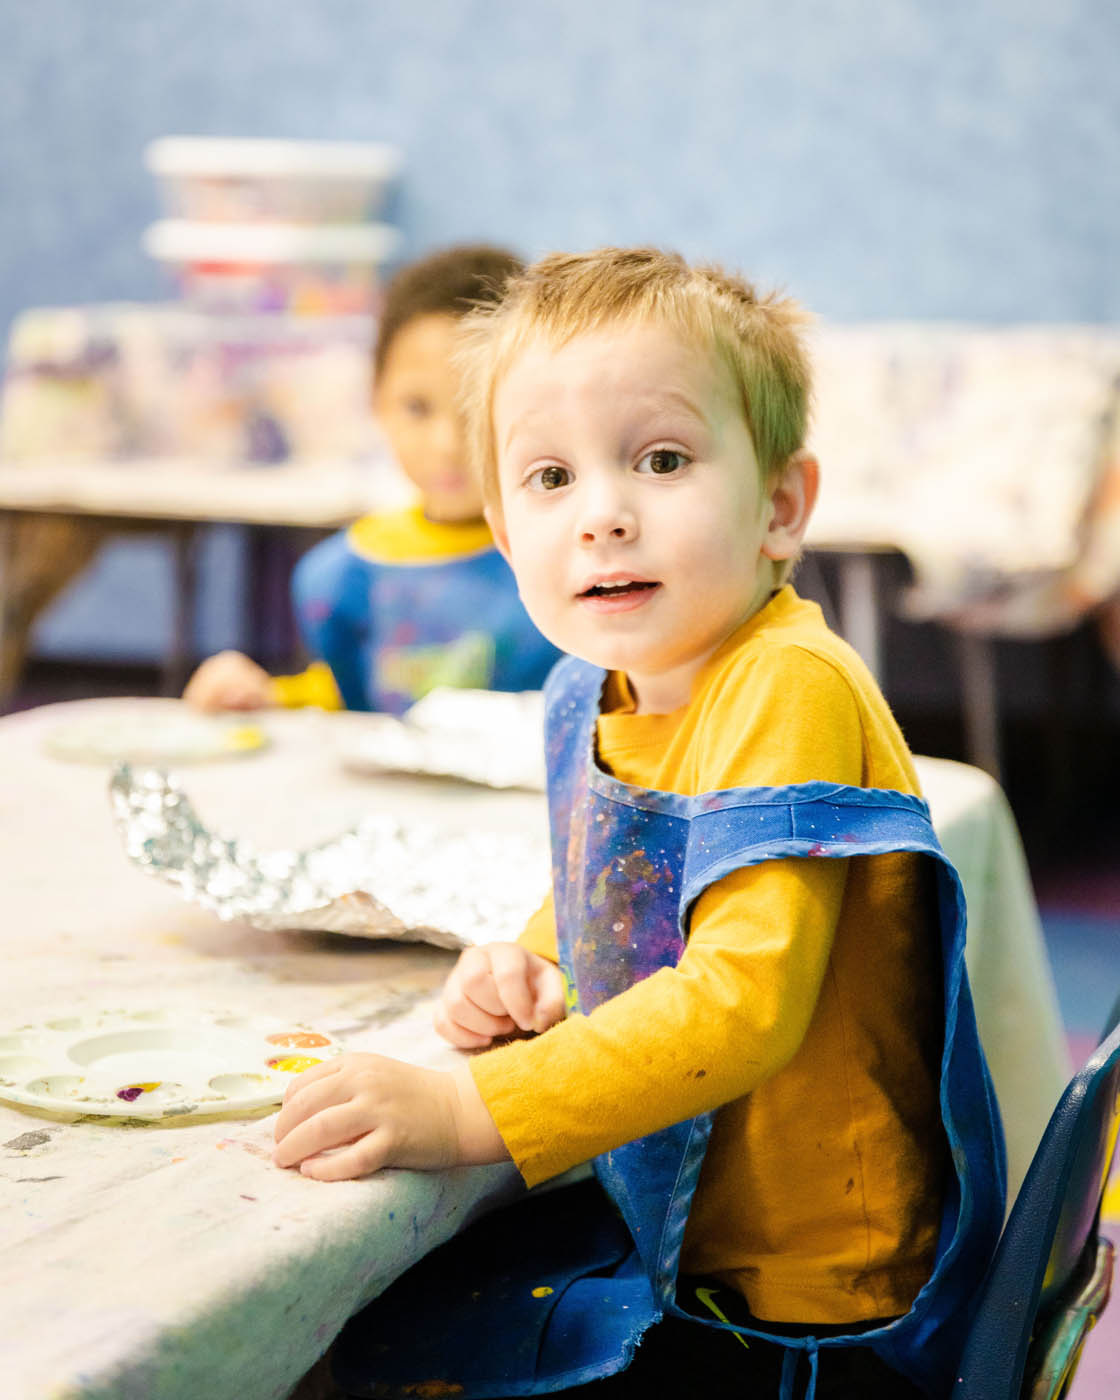 A boy in a yellow shirt in a St. Petersburg toddler art class at Romp n' Roll.